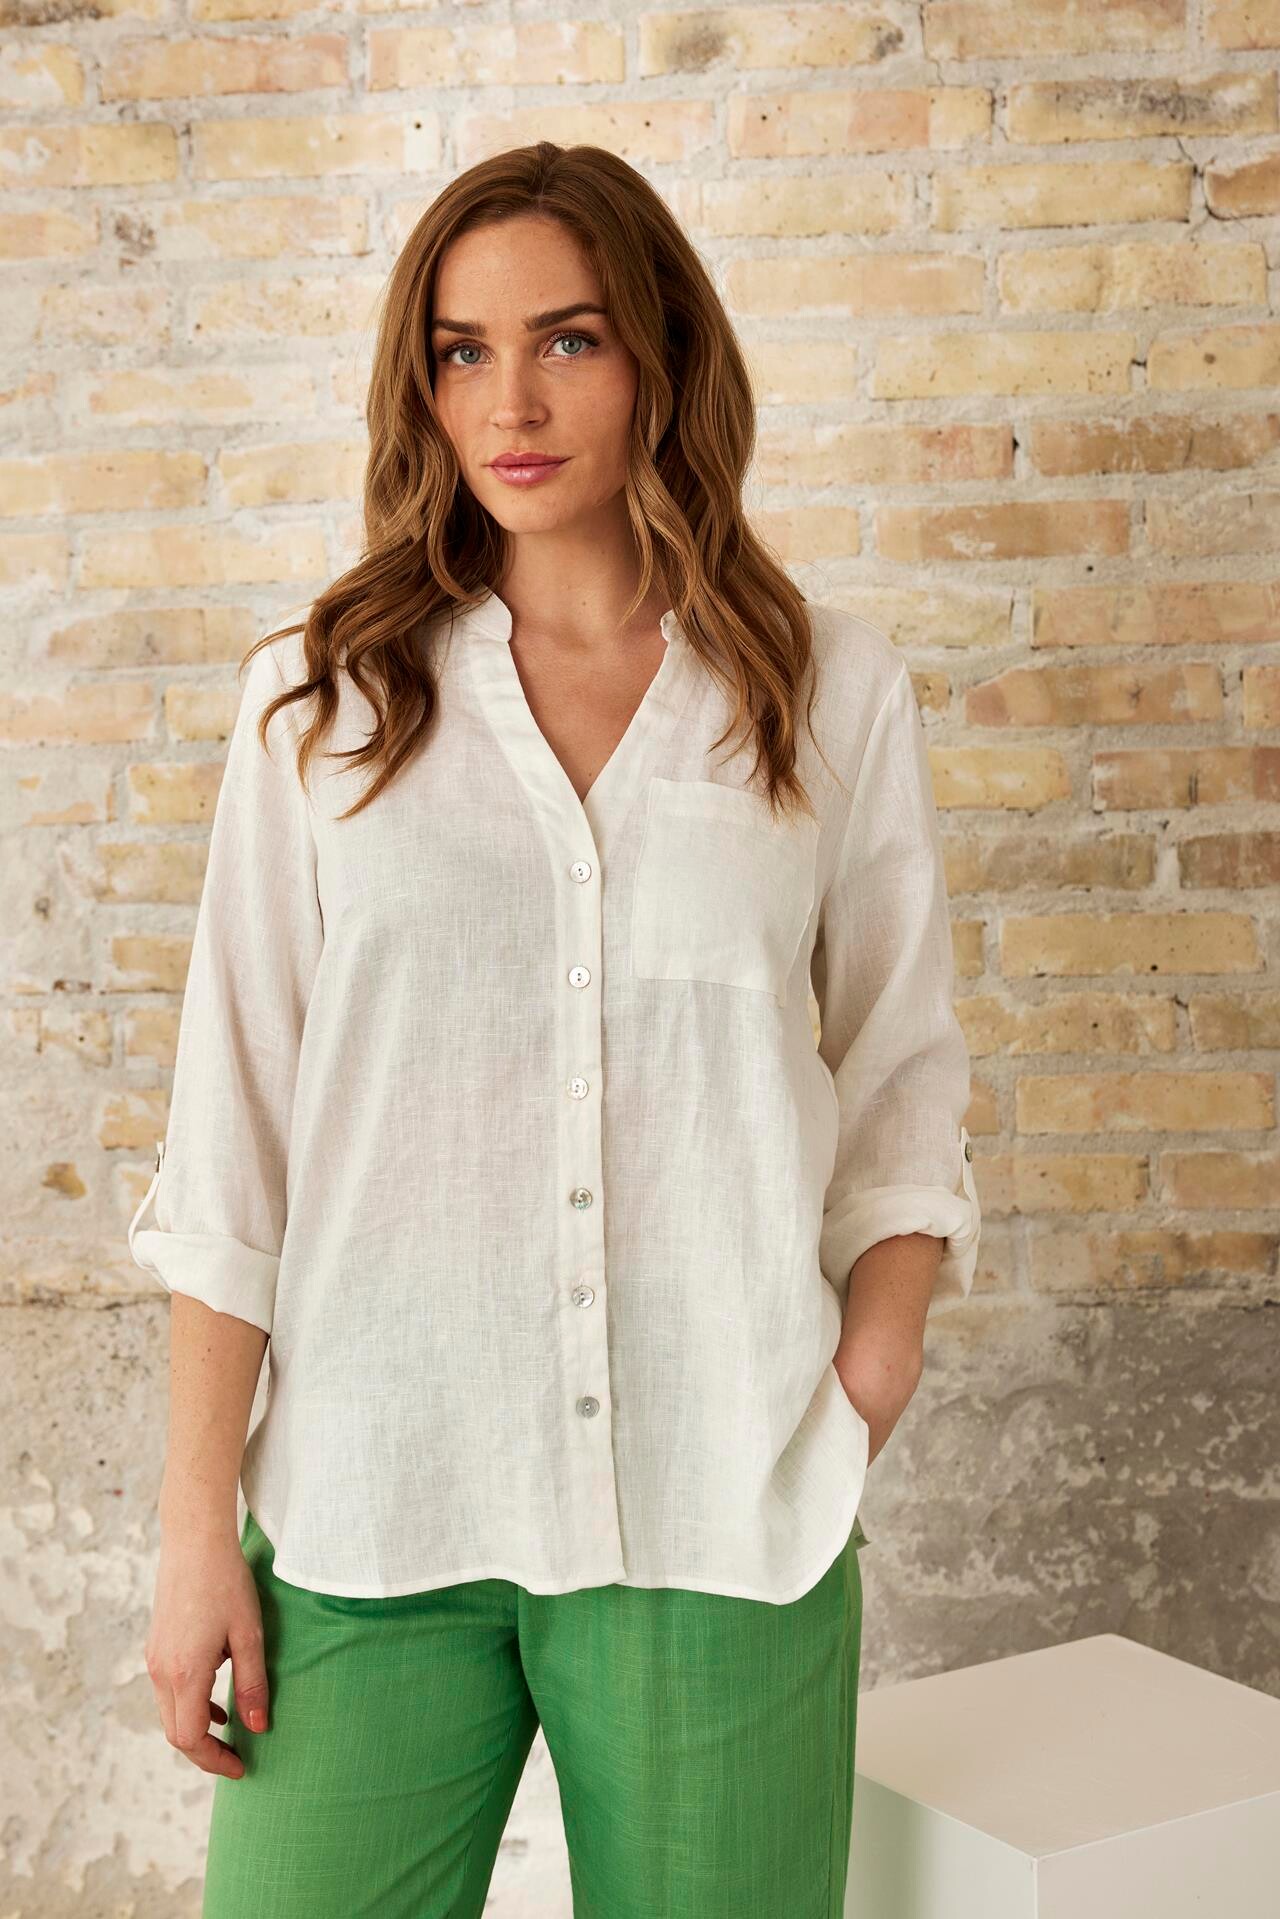 Se IN FRONT Linea Skjorte, Farve: Off White, Størrelse: L, Dame hos Infront Women